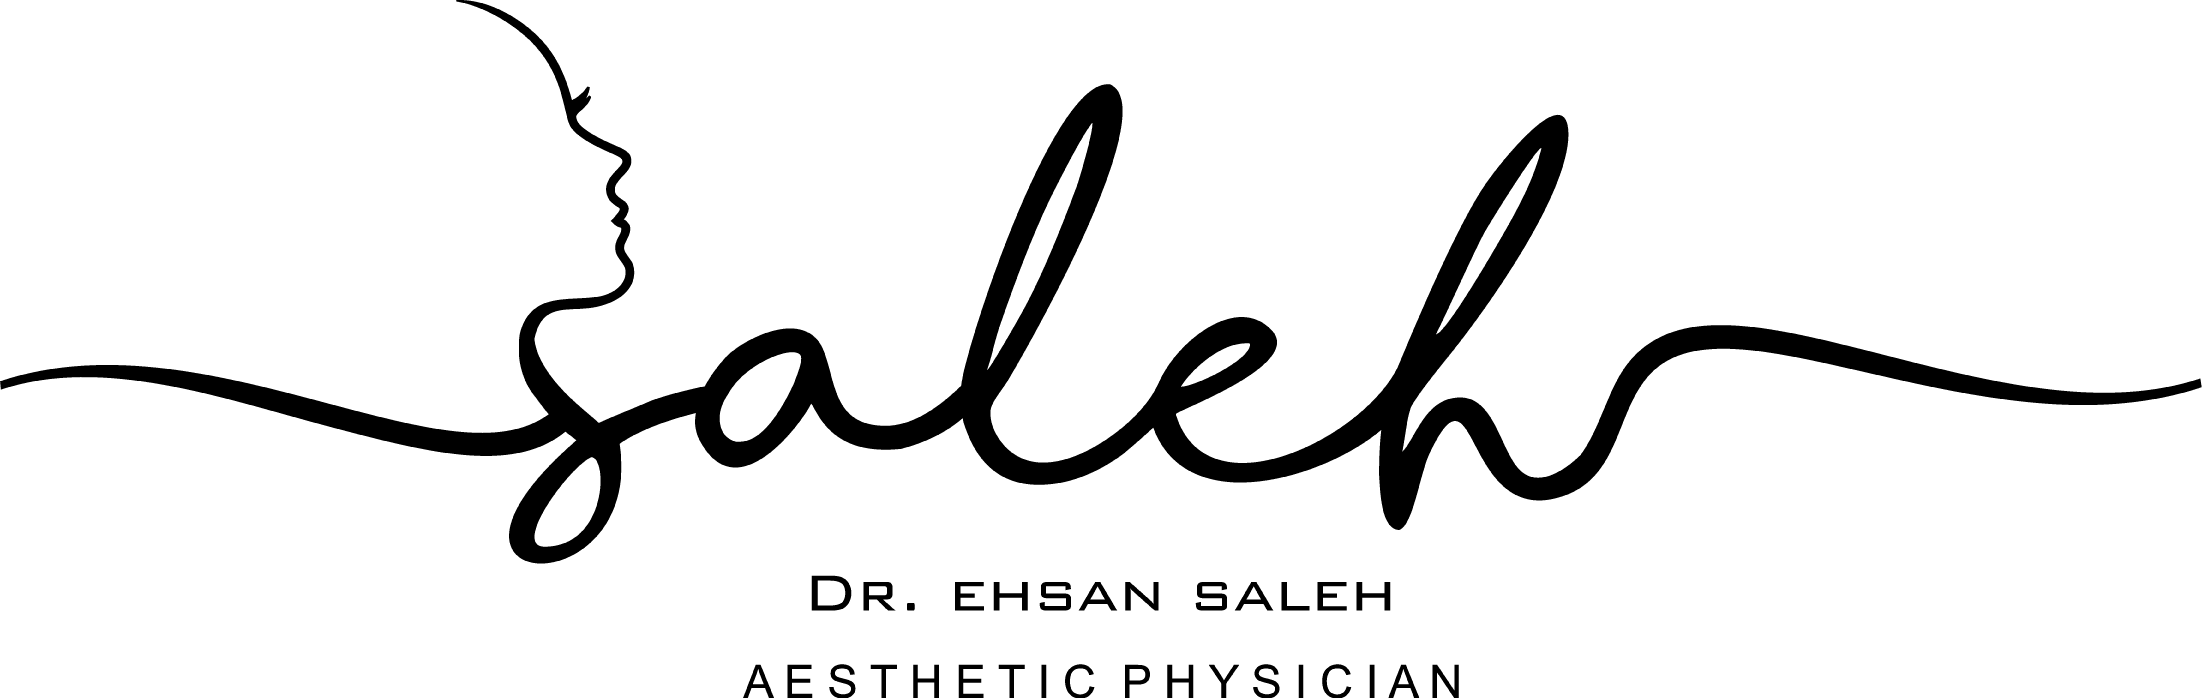 logo drehsansaleh